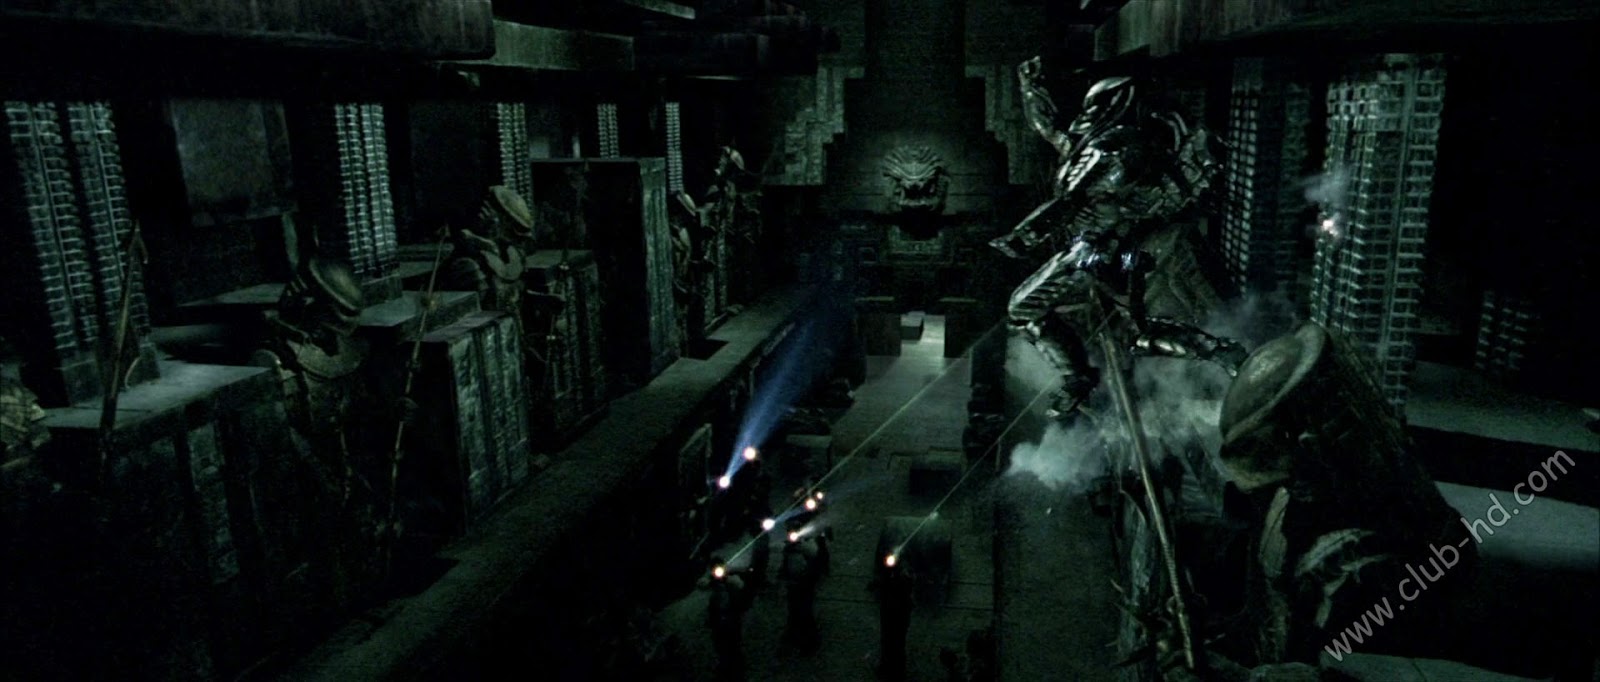 Alien_vs_Predator_UNRATED_CAPTURA-5.jpg